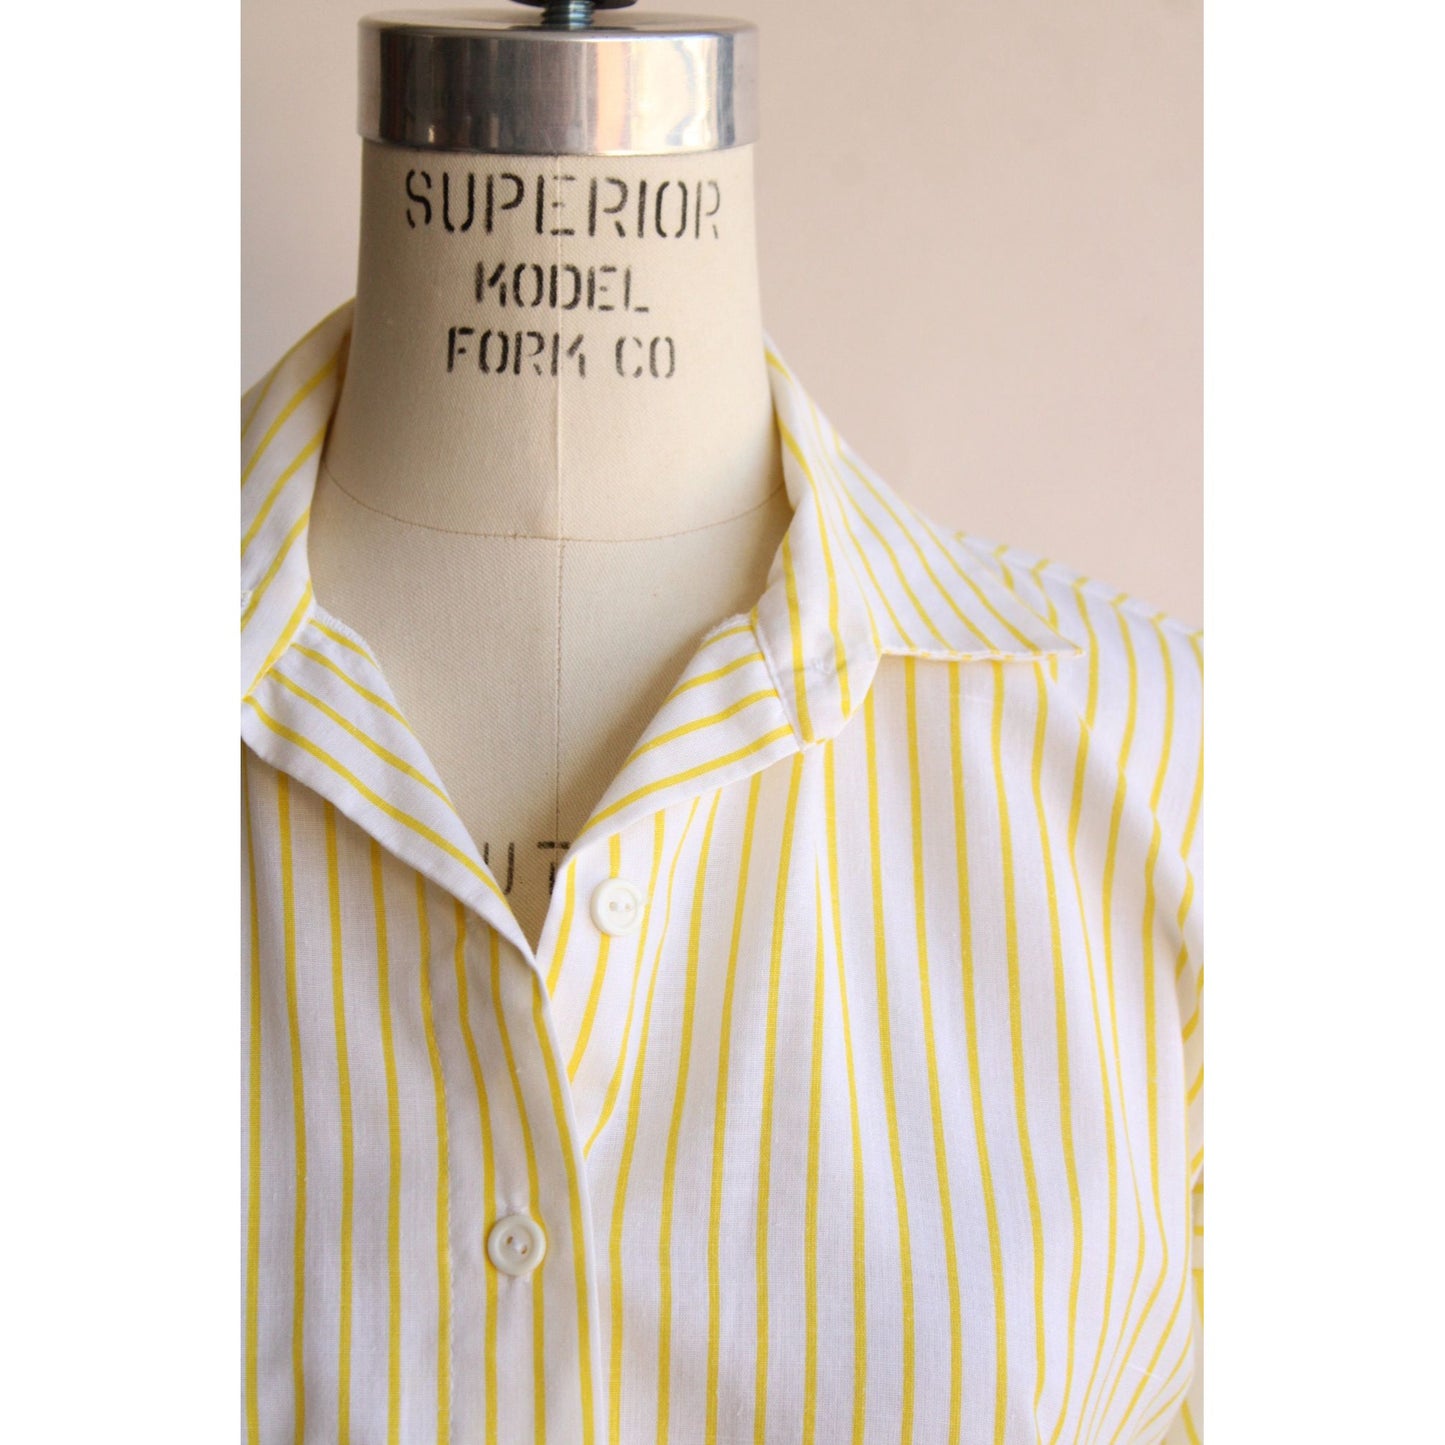 Vintage 1970s 1980s Yellow Striped Shirtwaist Dress